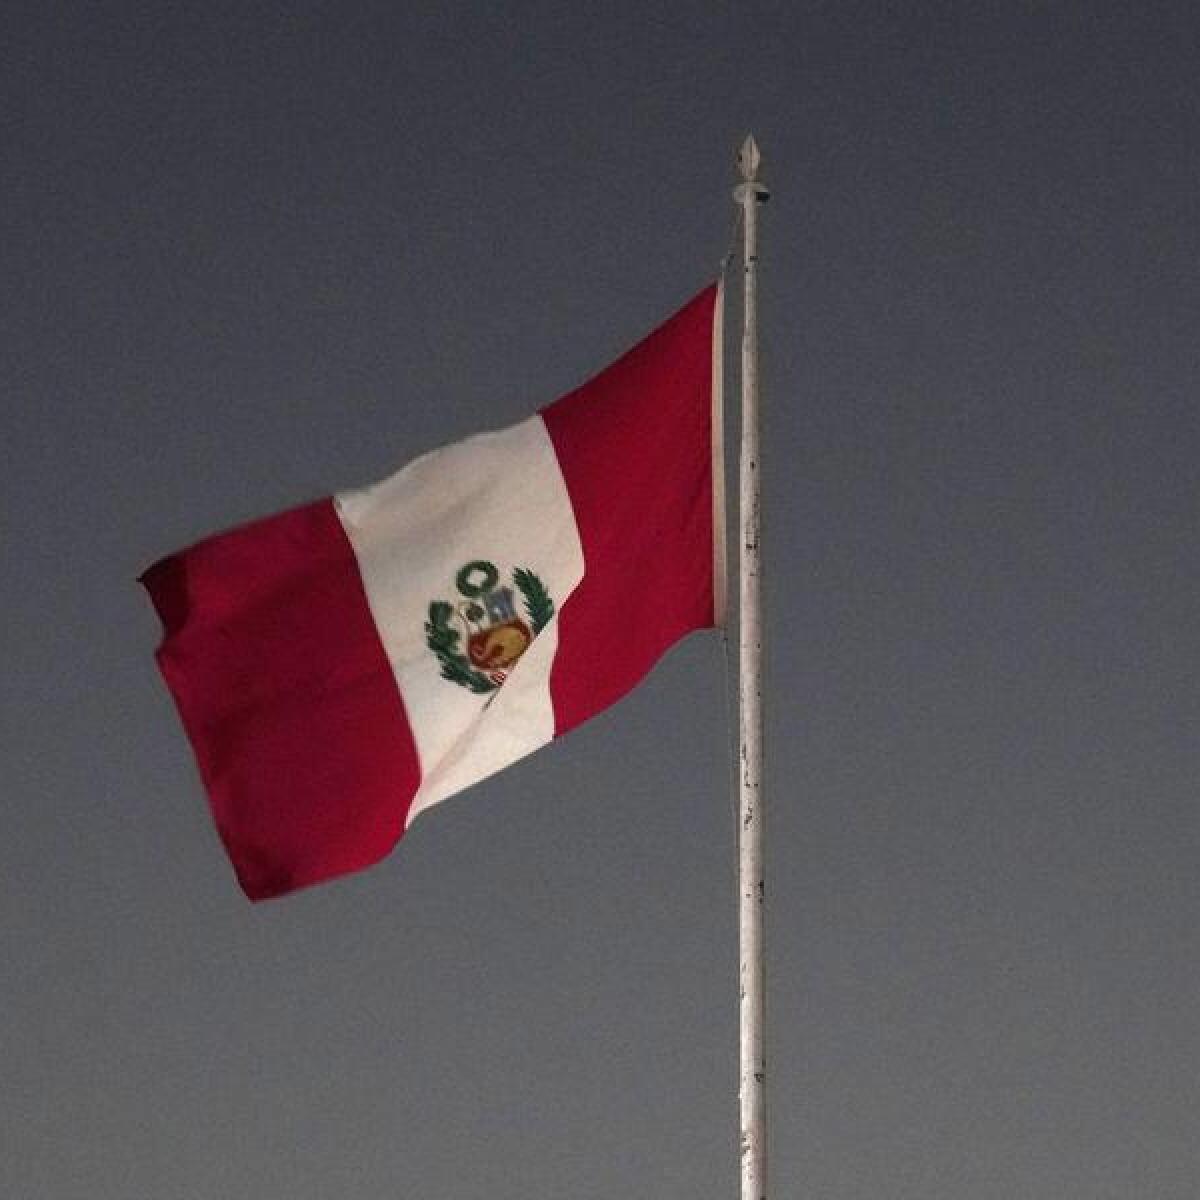 The Peruvian flag